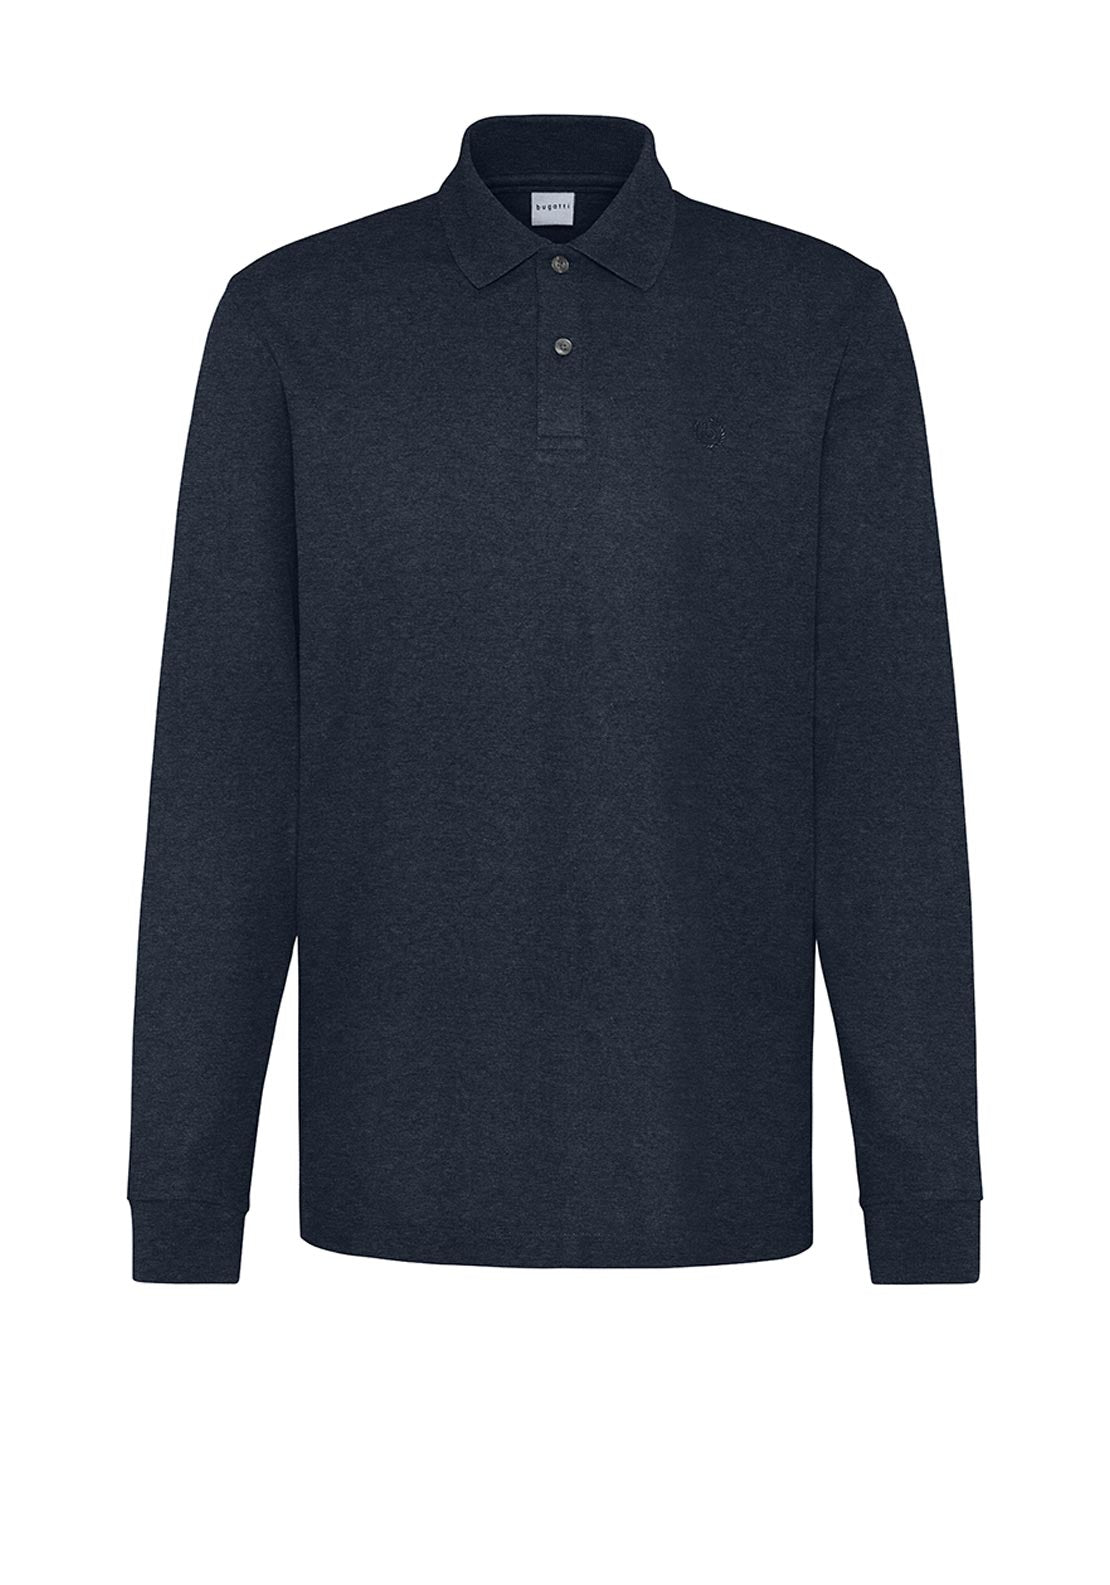 Bugatti Long Sleeve Polo Shirt, Navy - McElhinneys